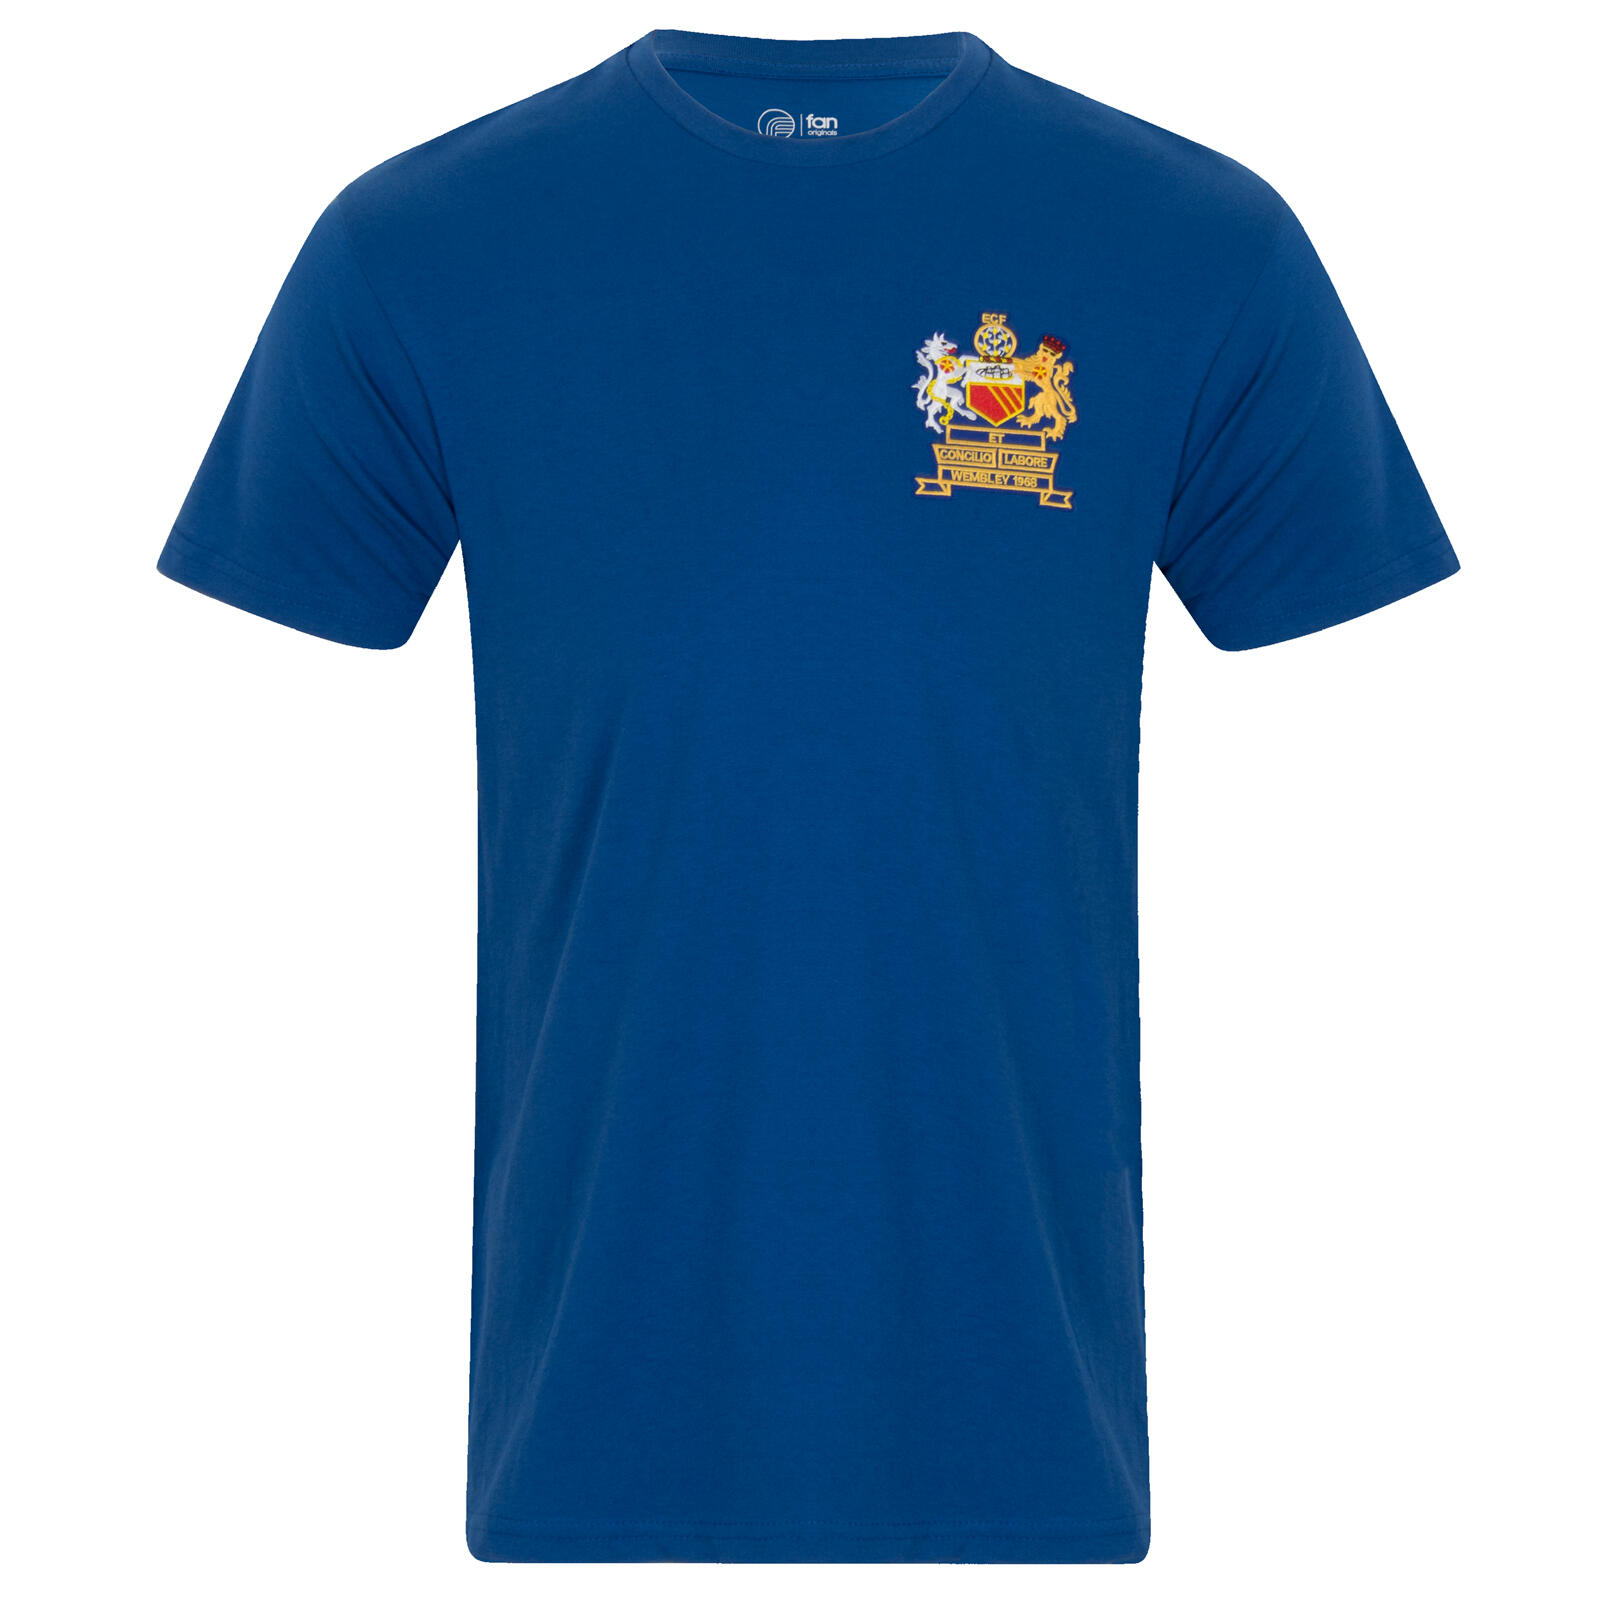 FAN ORIGINALS Fan Originals Manchester T-Shirt Mens 1968 European Colours Blue